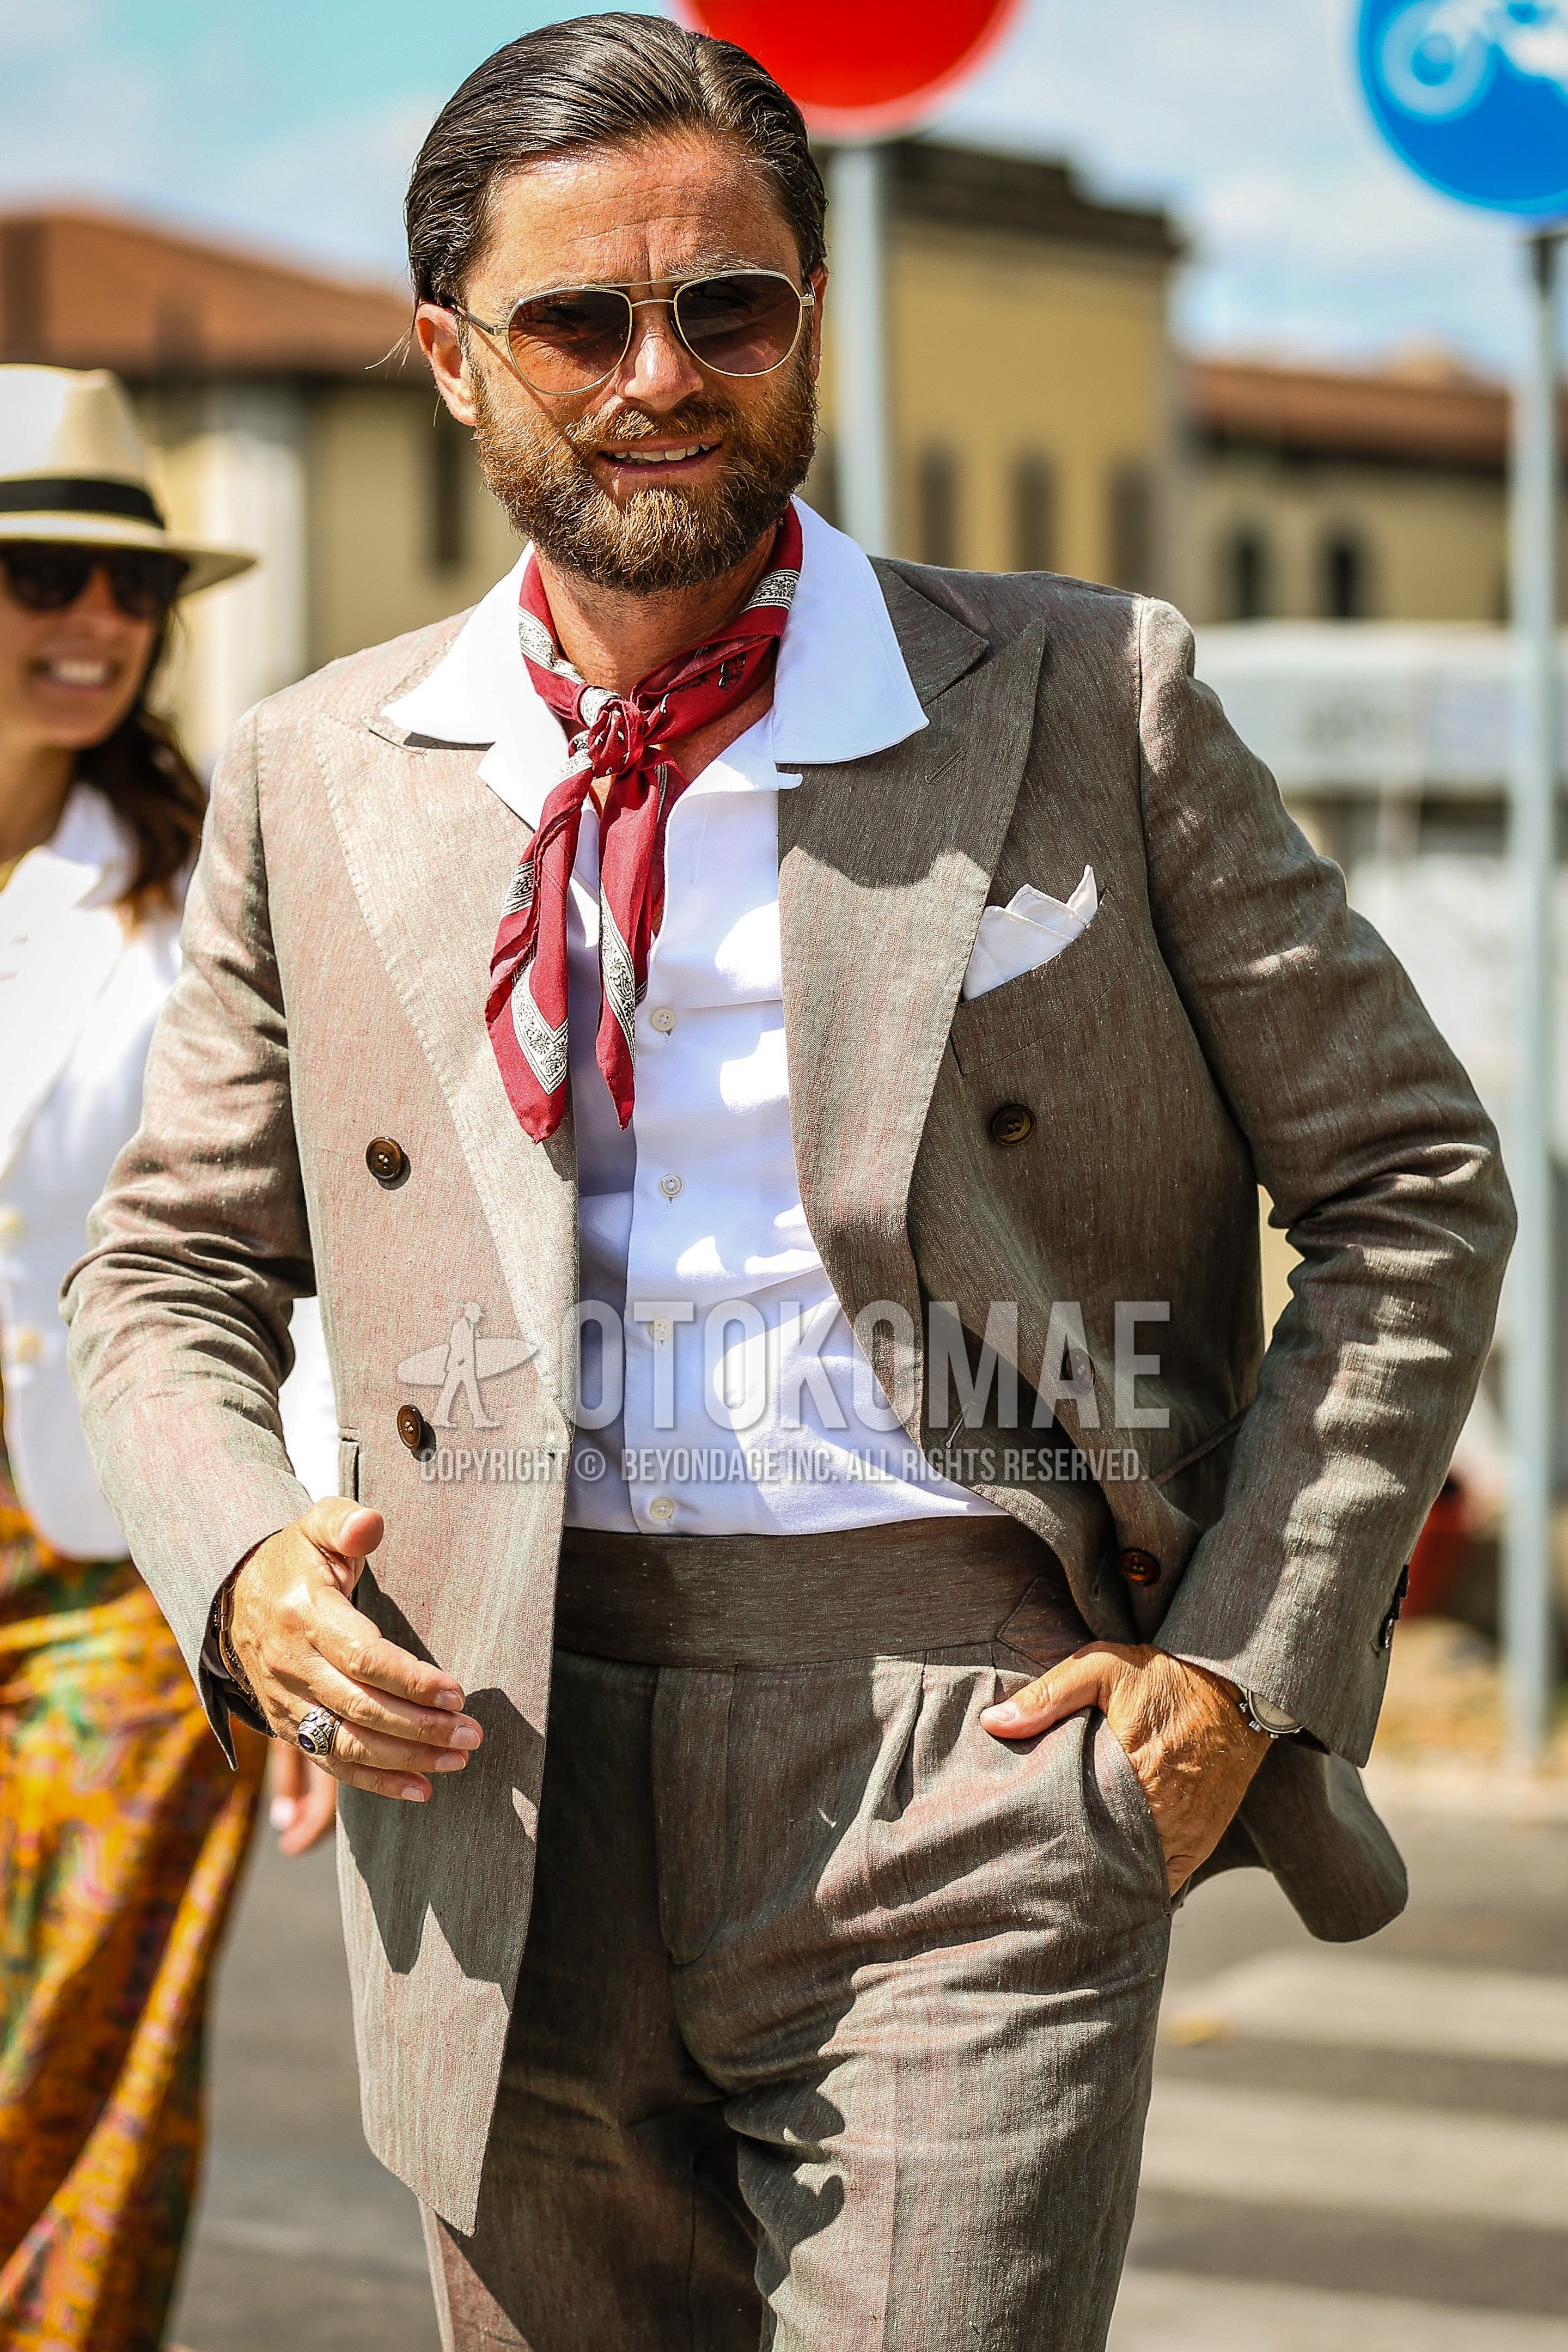 Men's spring summer outfit with silver plain sunglasses, red scarf bandana/neckerchief, white plain shirt, beige suit suit.